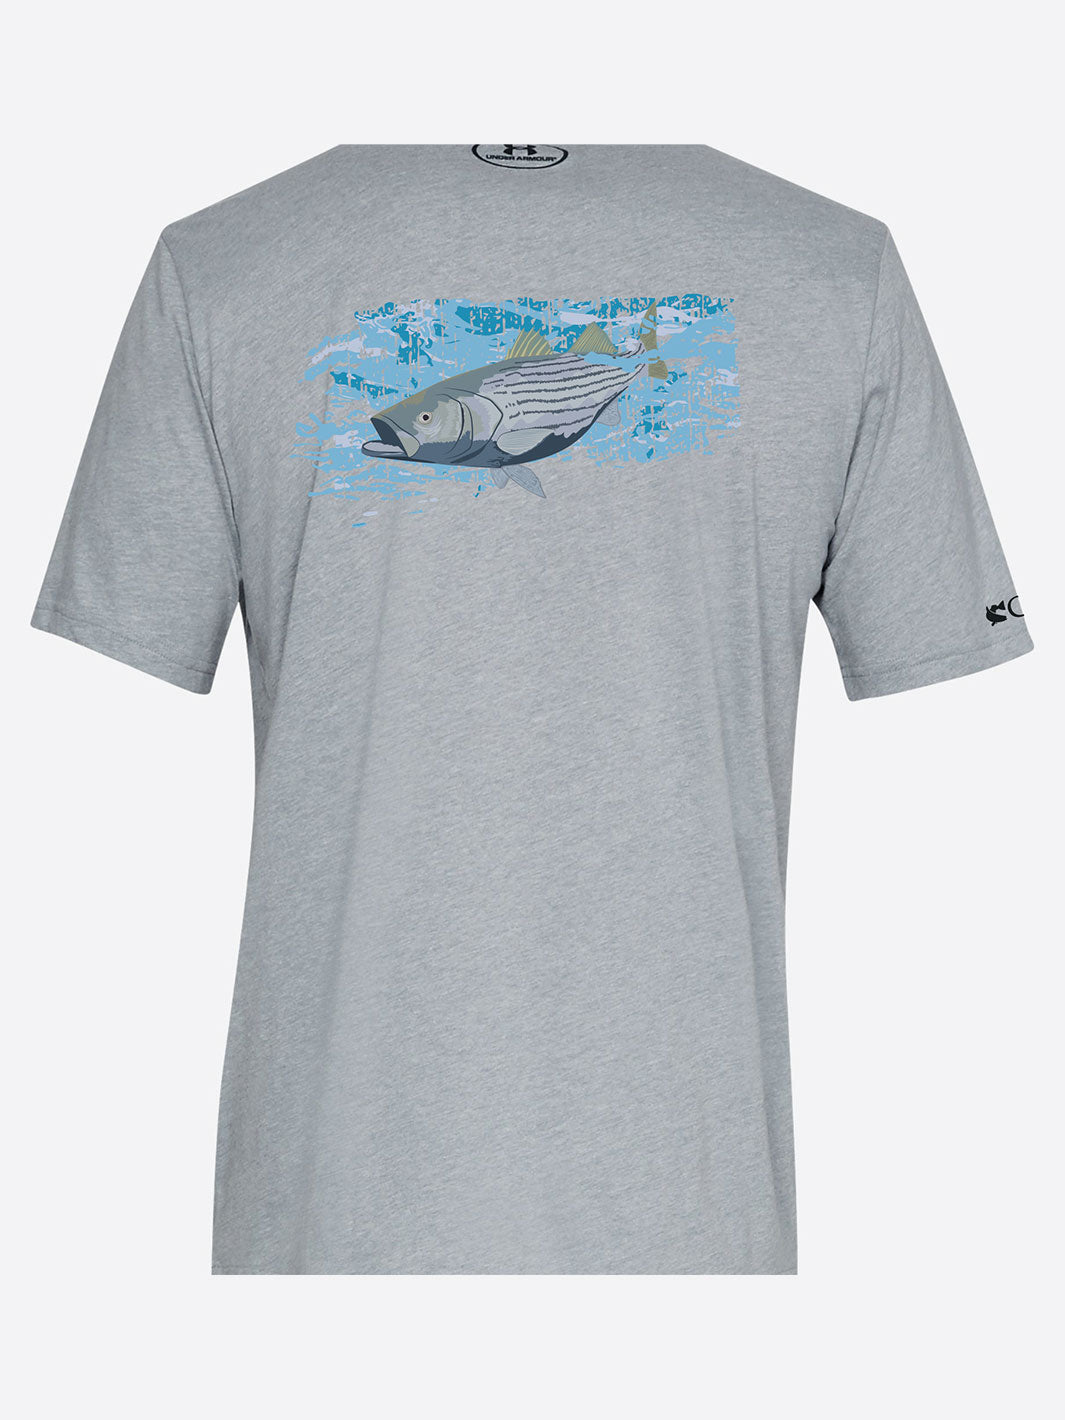 Mens - Men's Tops - Men's Fishing Shirts - Chesapeake Bay Outfitters